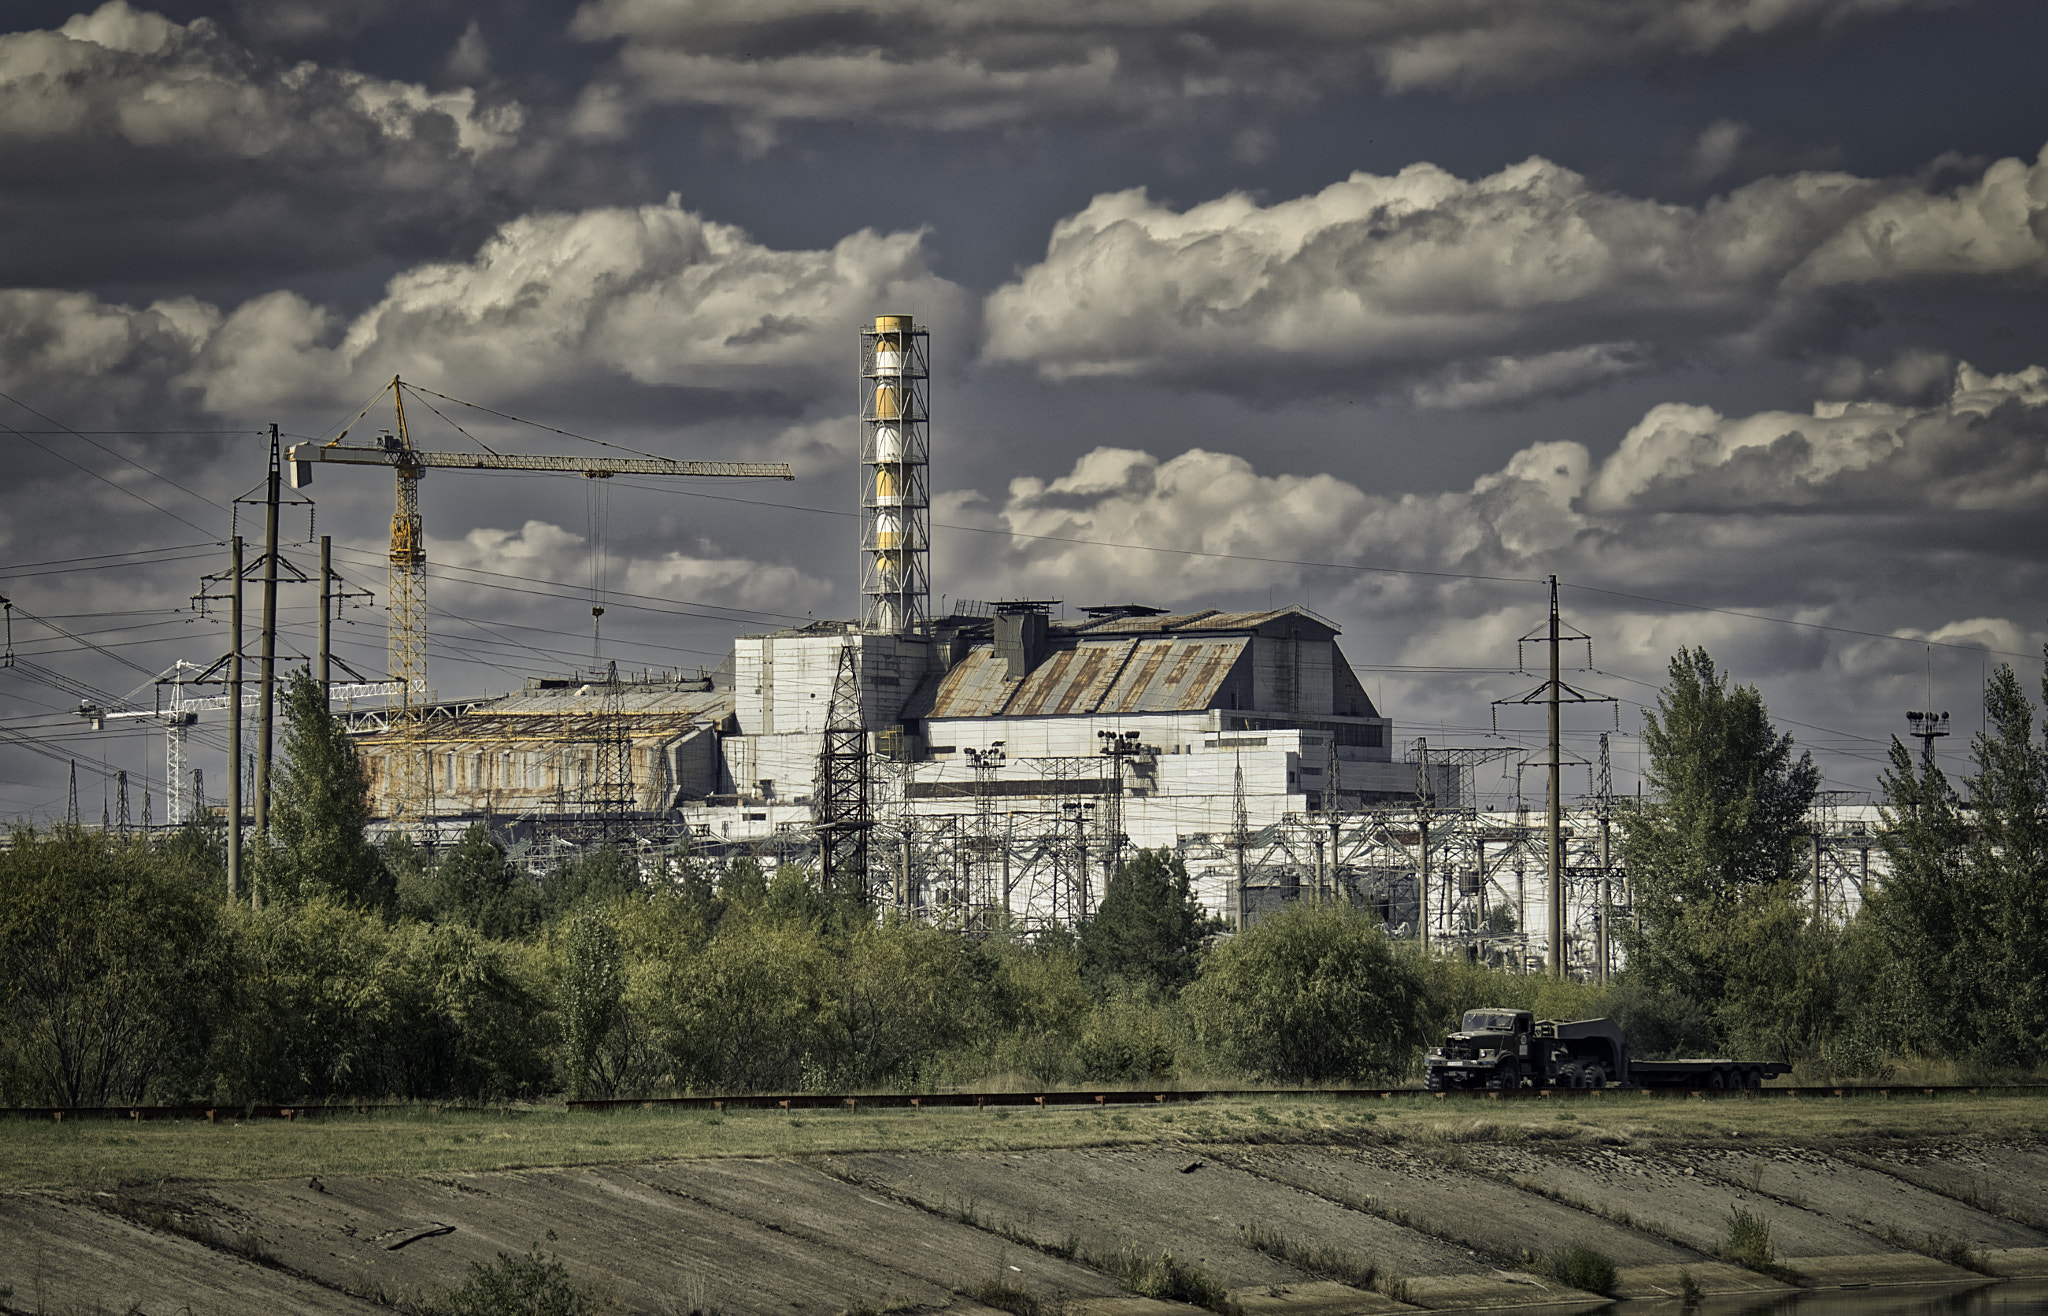 Sony a6300 sample photo. Reactor 4 (chernobyl power plant) photography